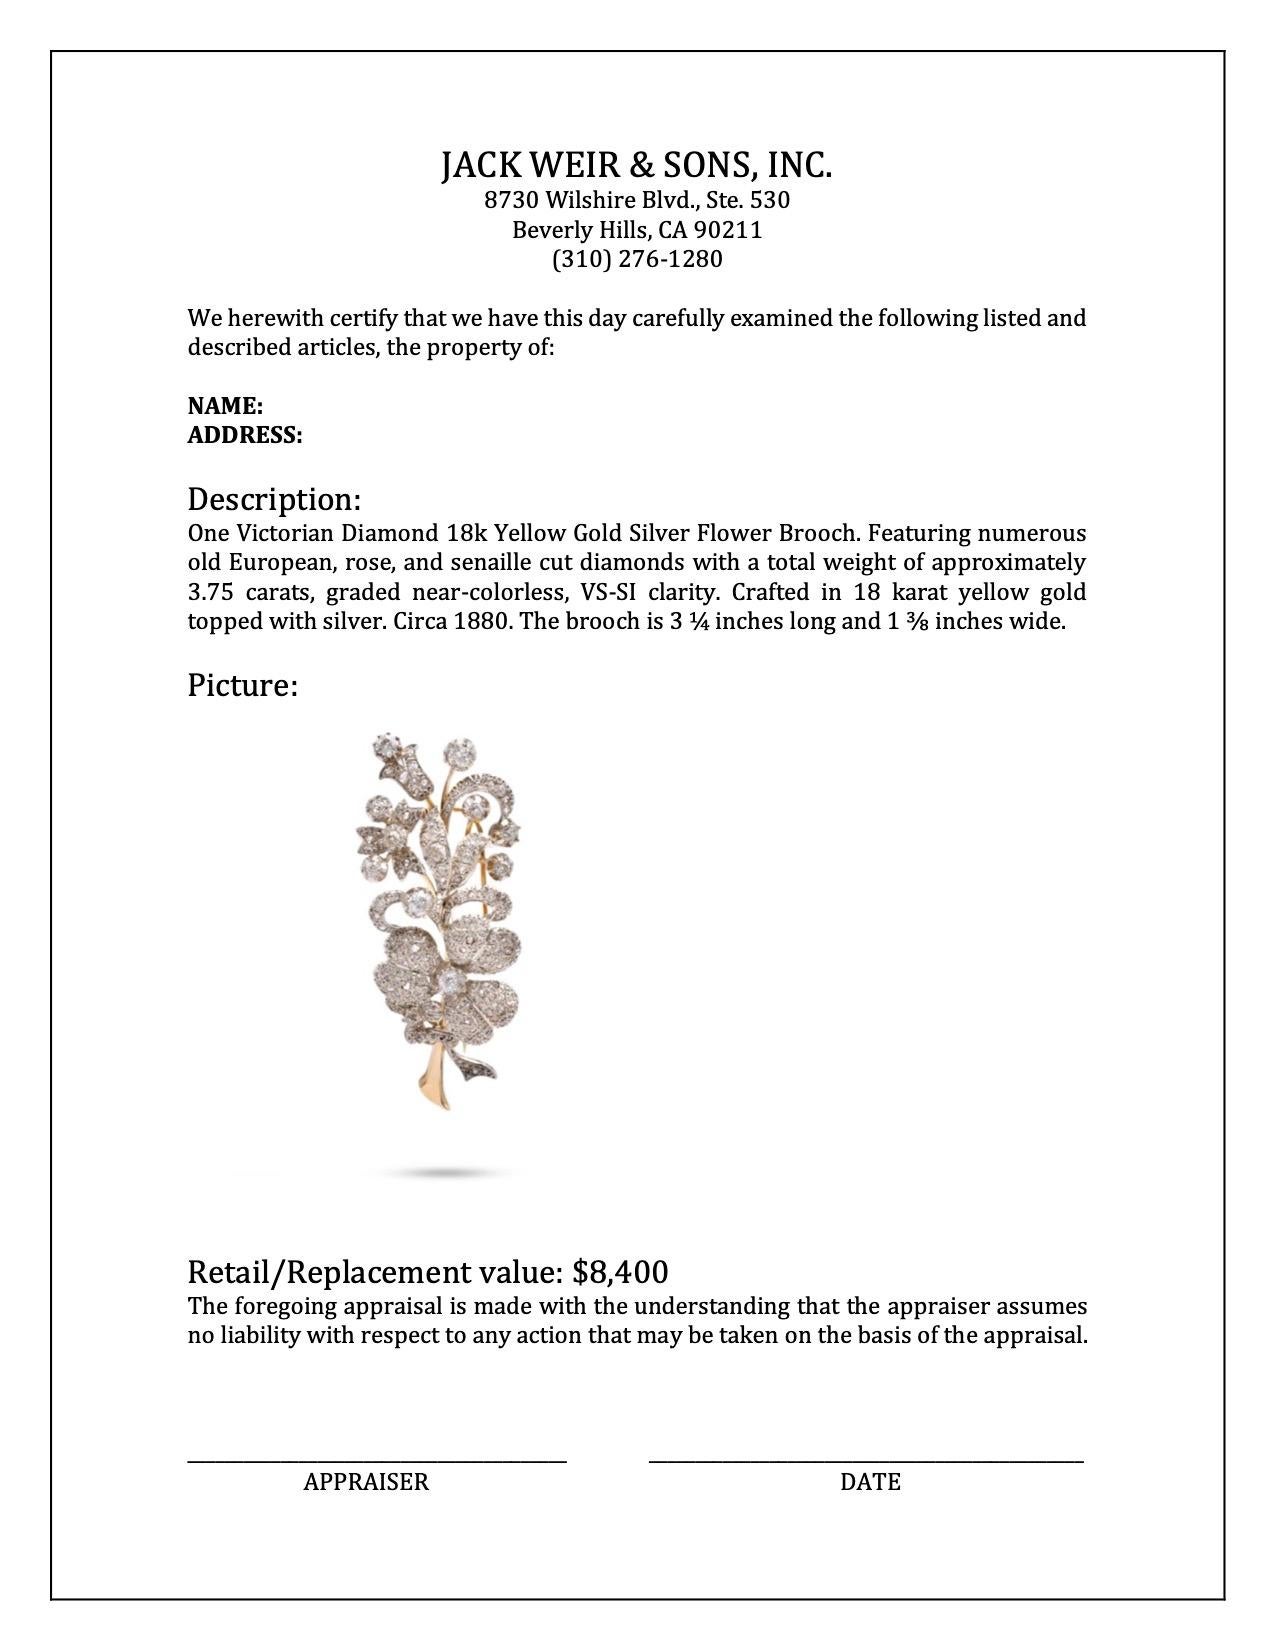 Women's or Men's Victorian Diamond 18k Yellow Gold Silver Flower Brooch For Sale